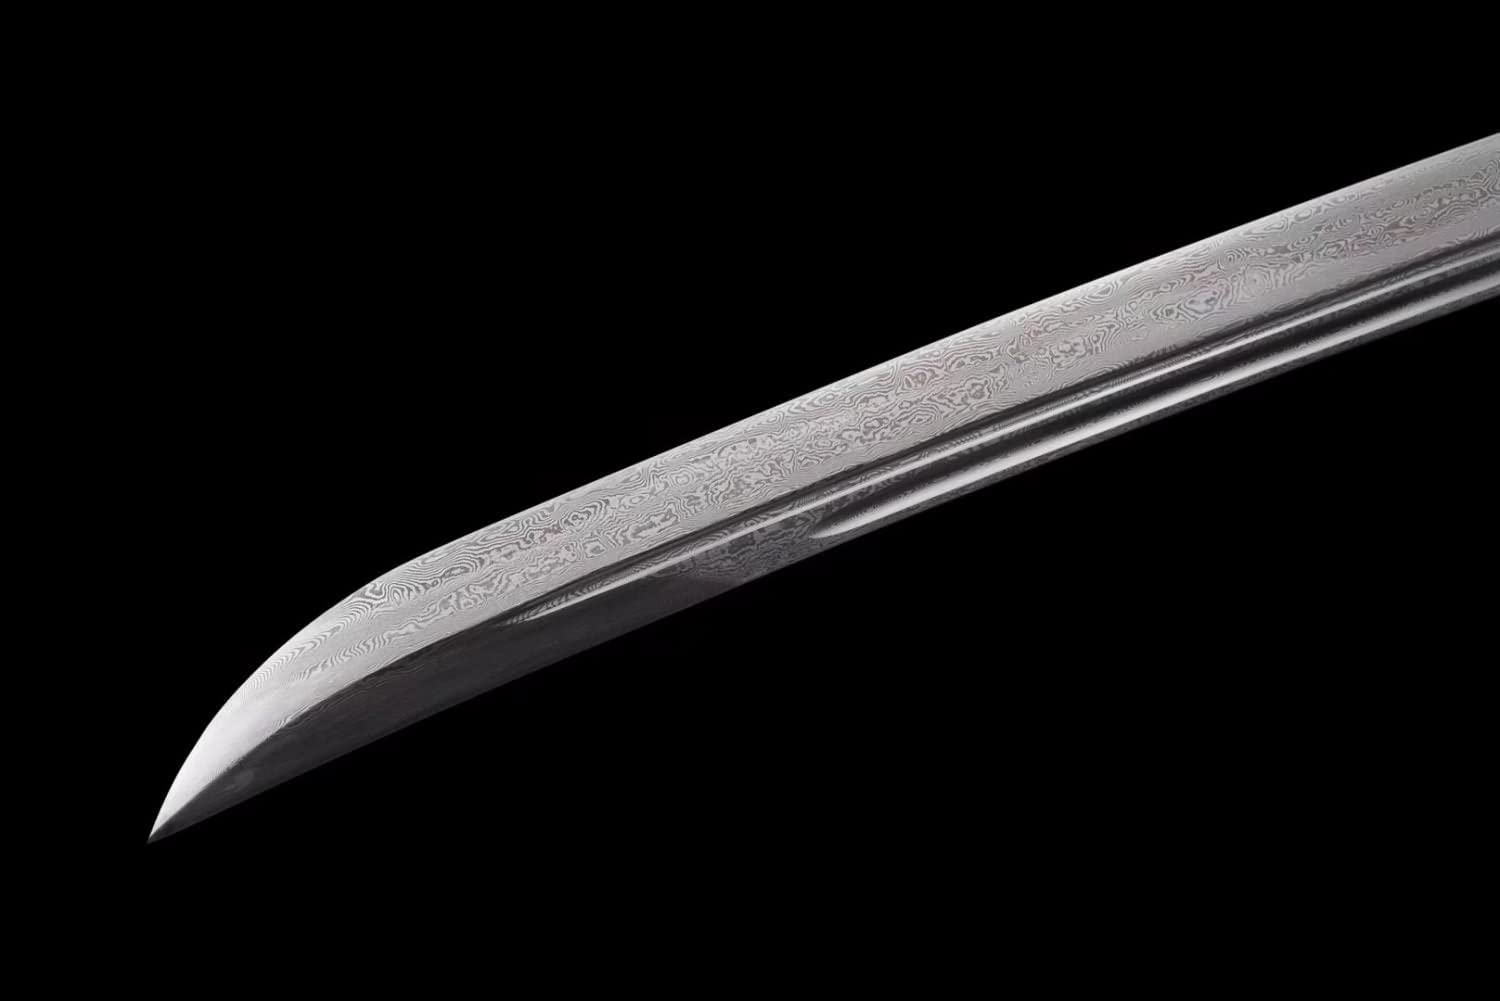 Qing dao Sword Real,Damascus Steel Steel Blade,Rosewood,chinese swords